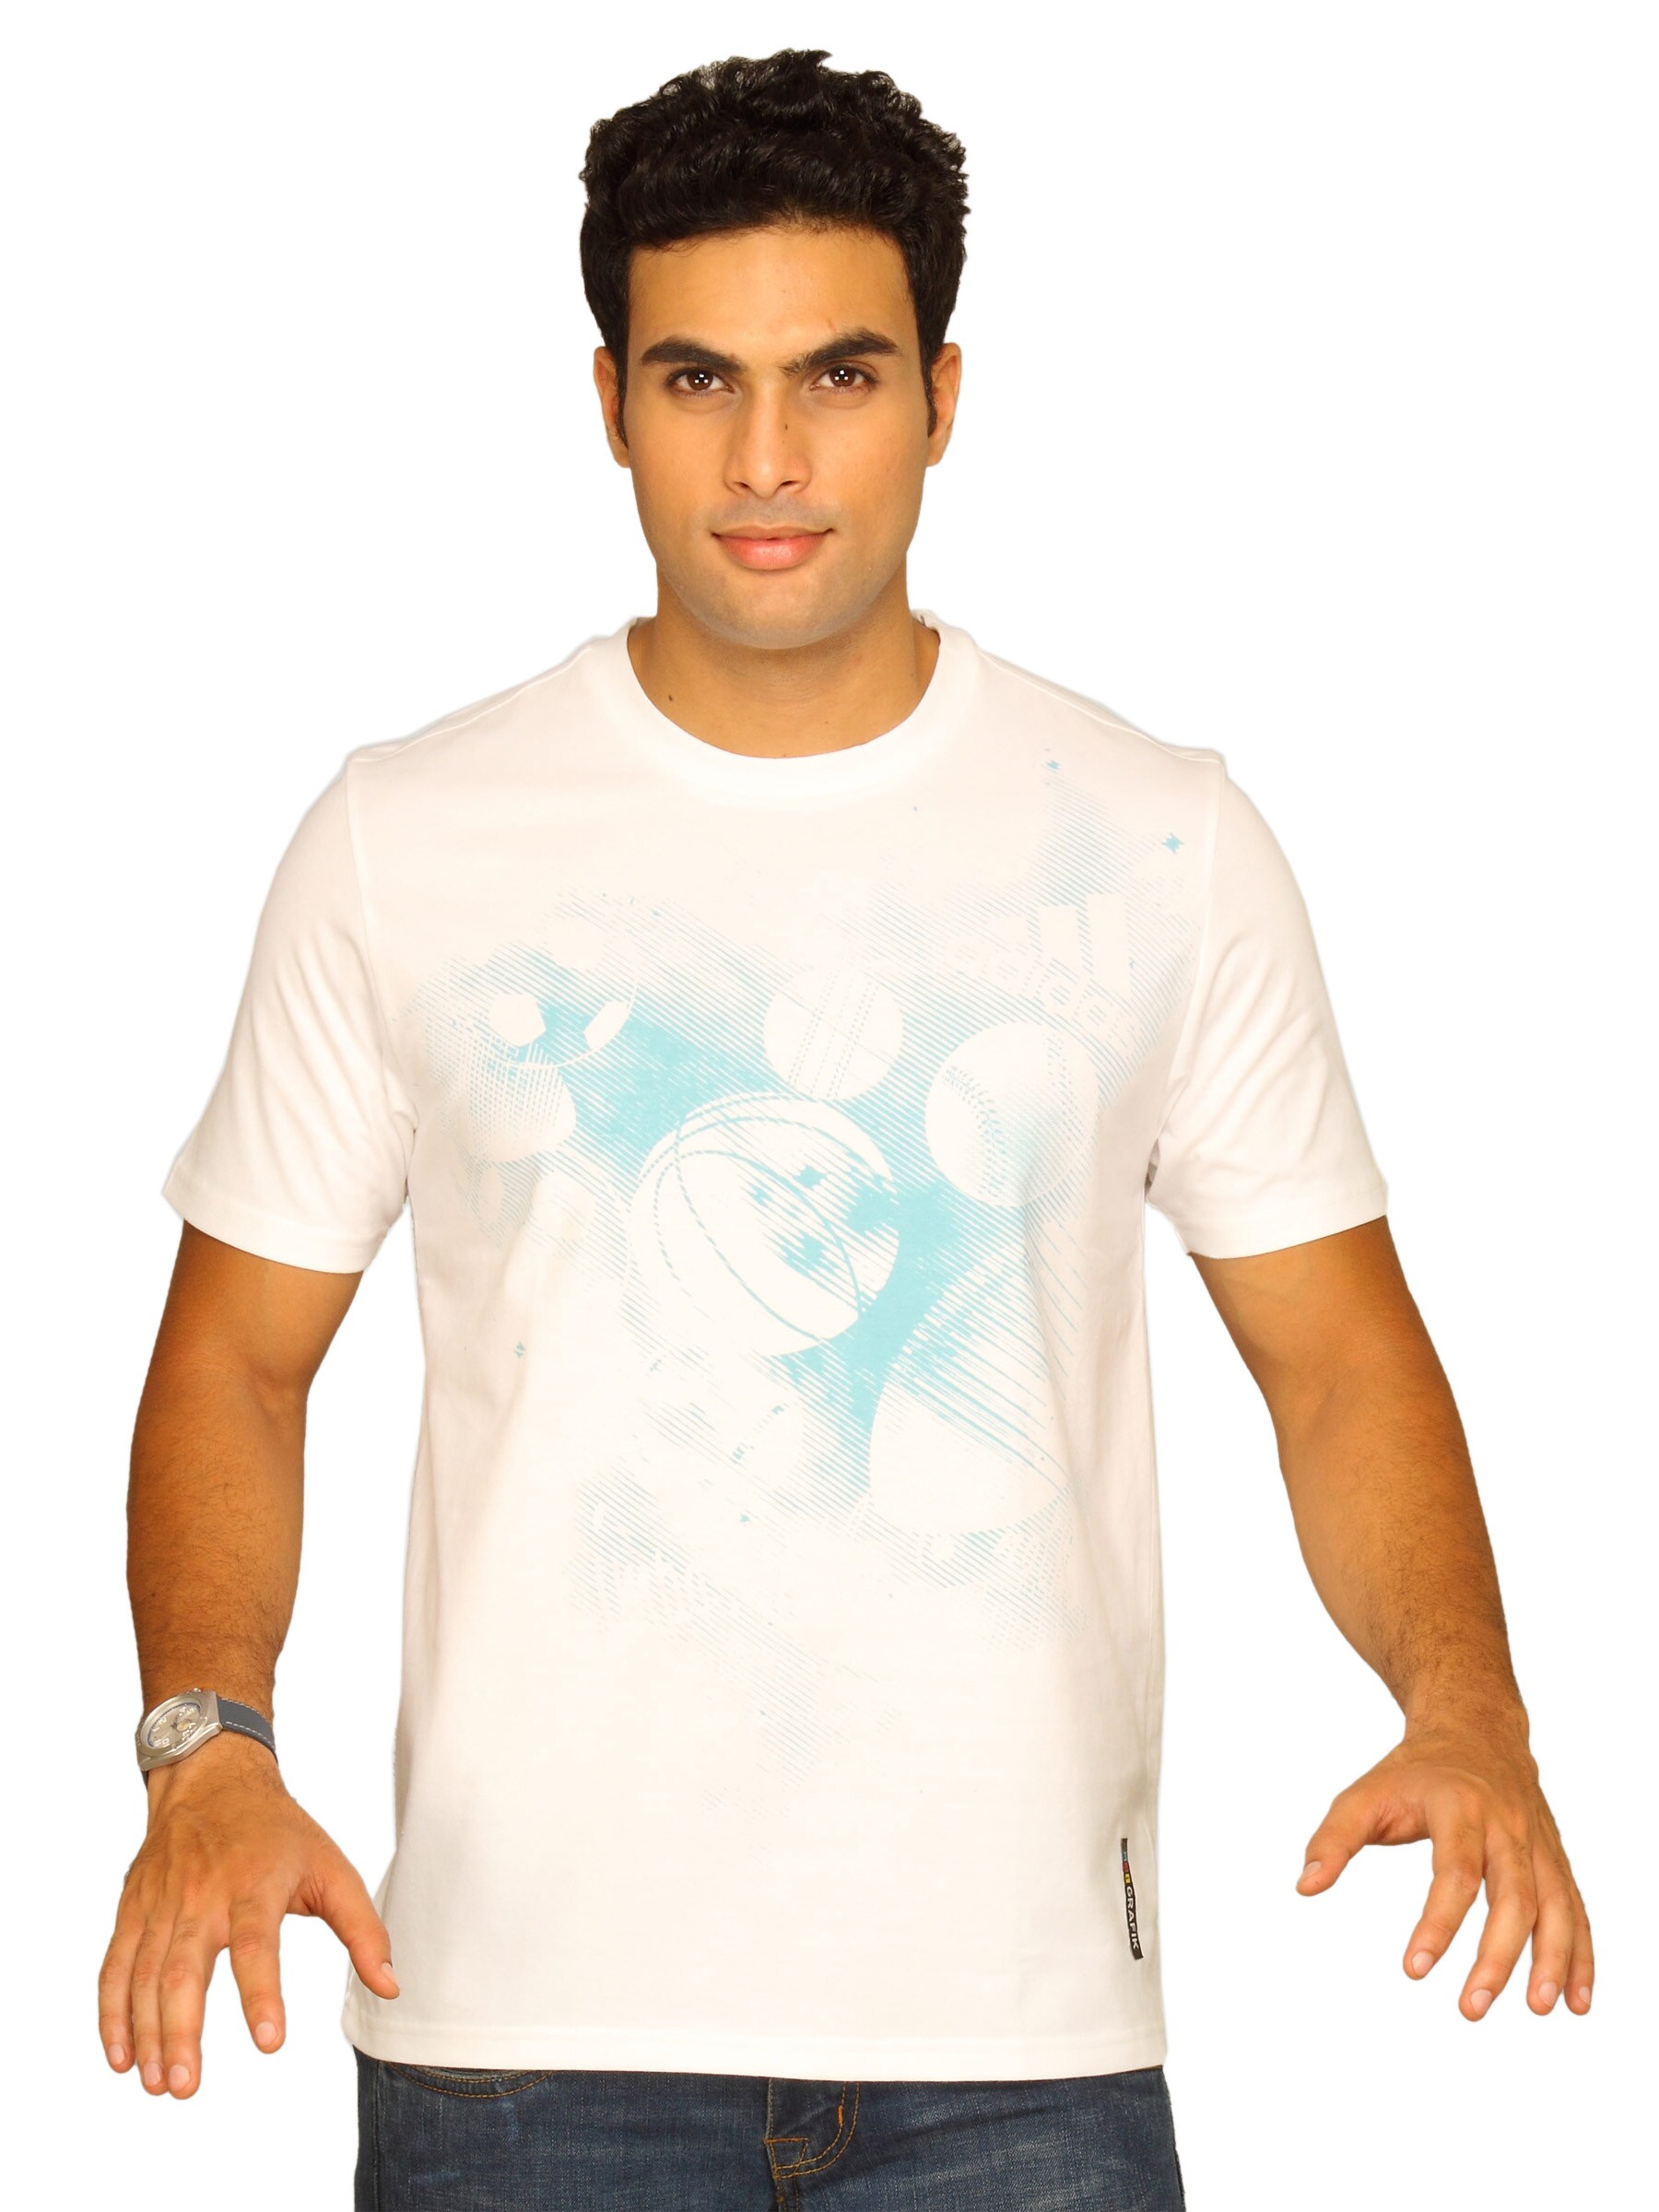 ADIDAS Men's Best Shot White T-shirt